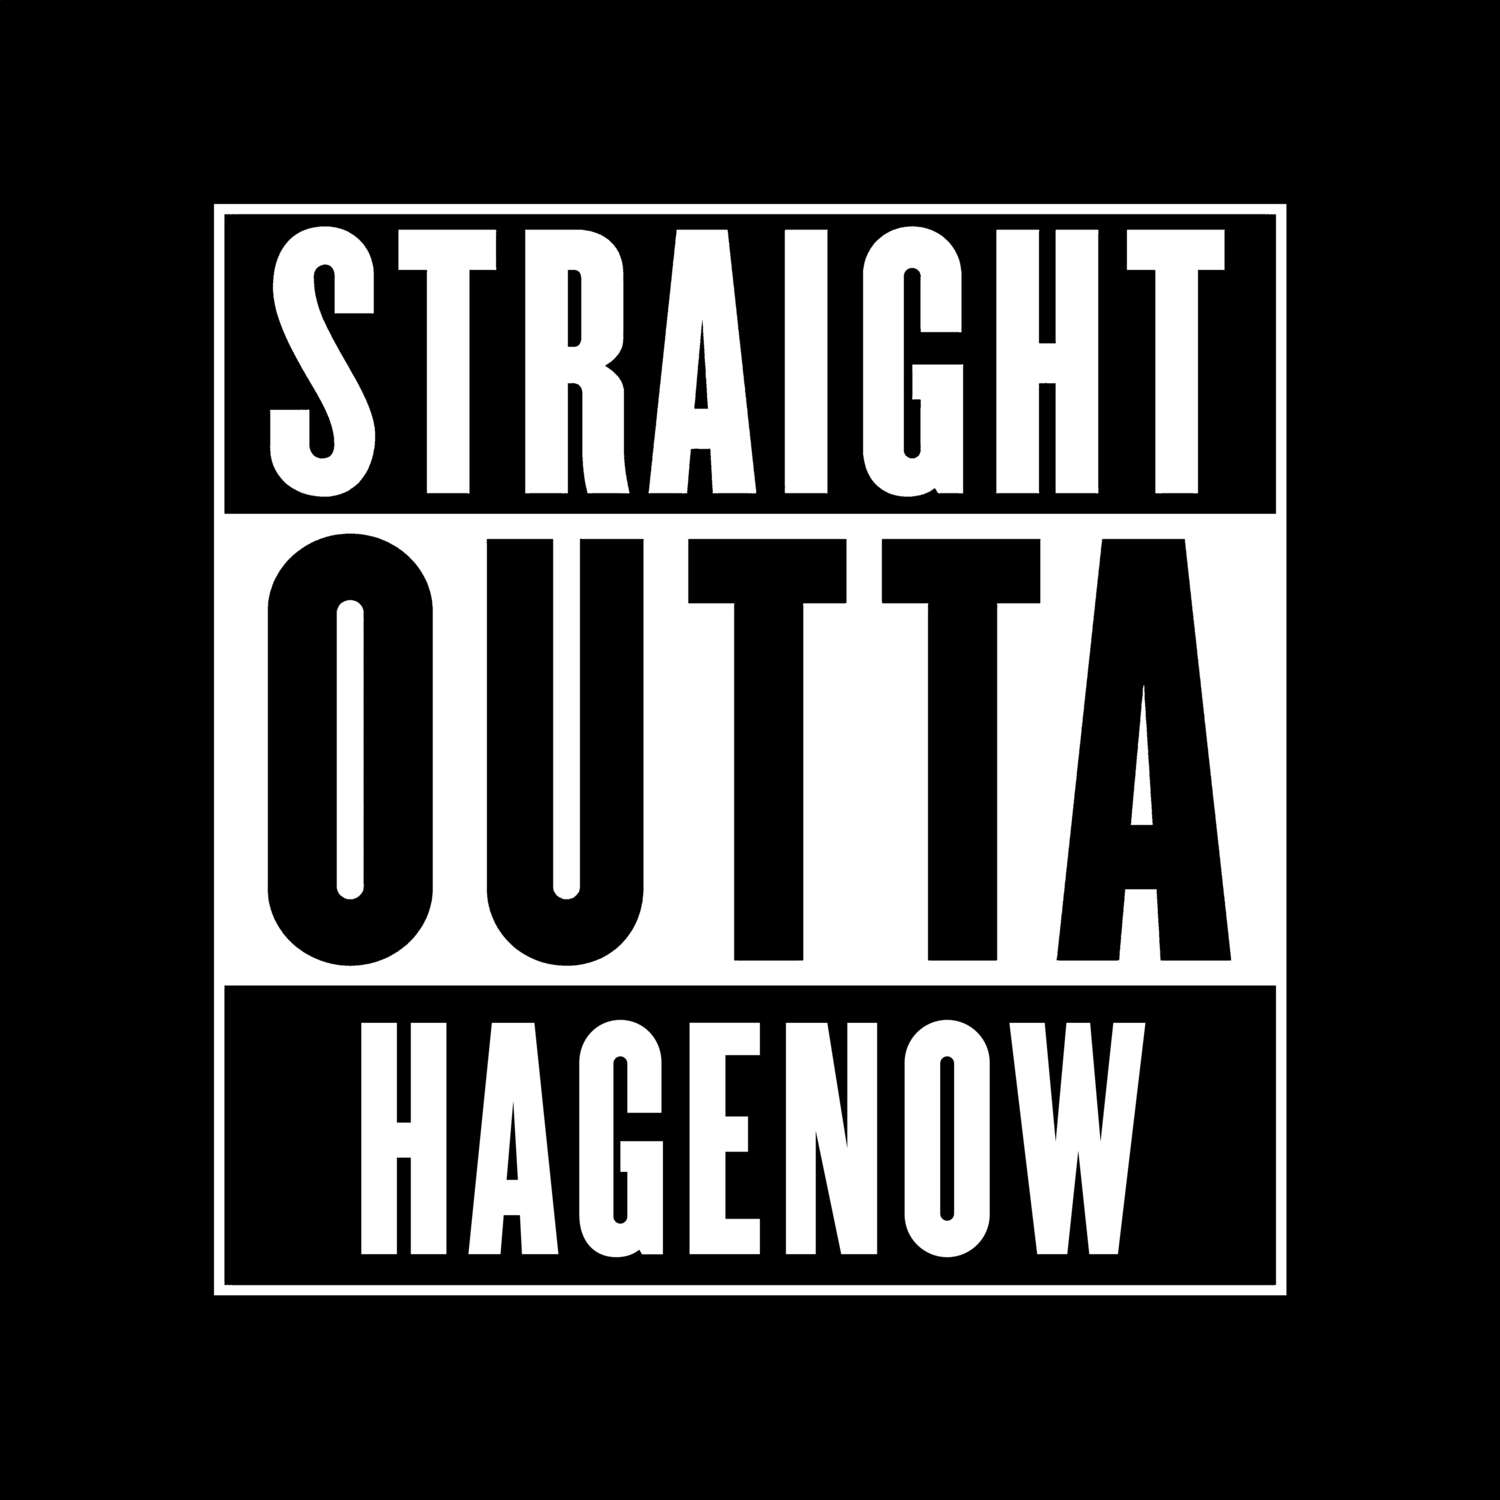 Hagenow T-Shirt »Straight Outta«